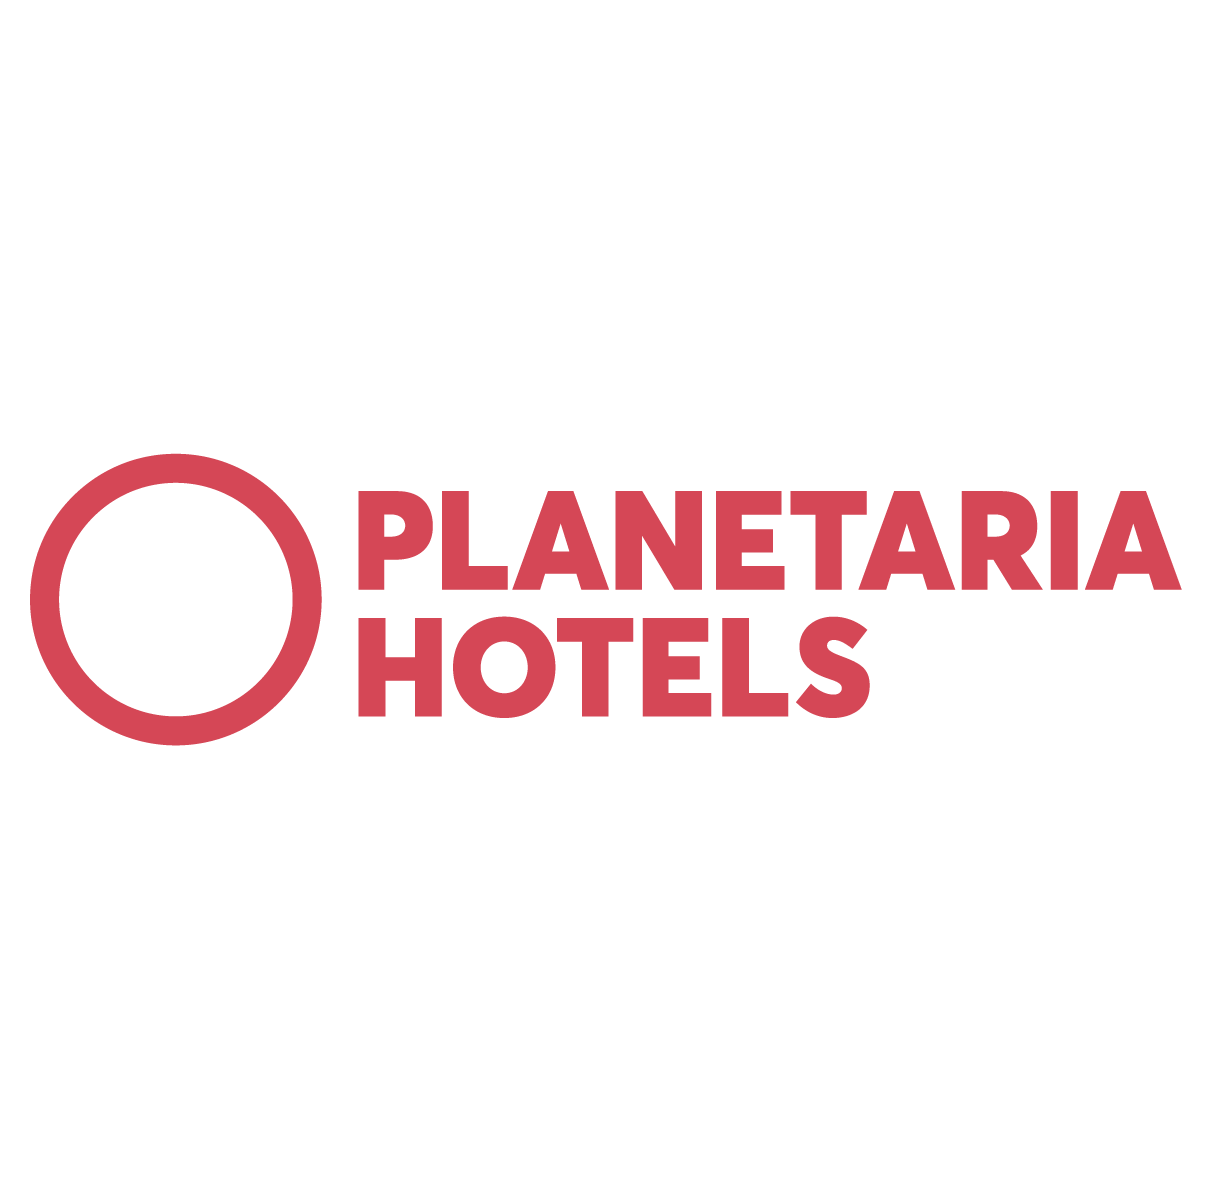 Planetaria Hotels